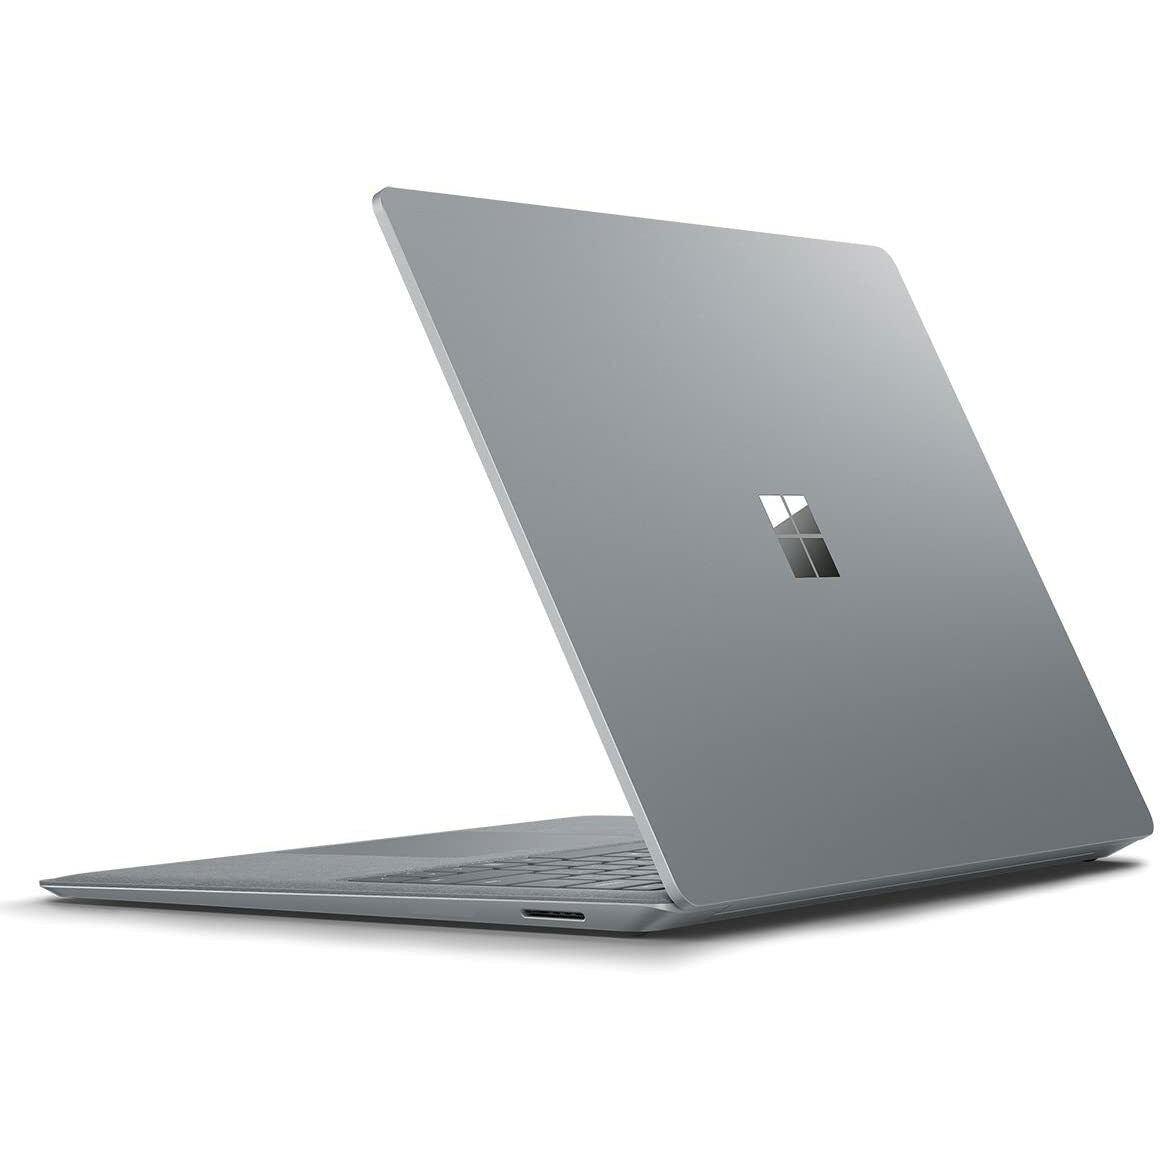 Microsoft Surface Laptop 2 1769, Core i5, 8GB RAM, 256GB SSD, Silver